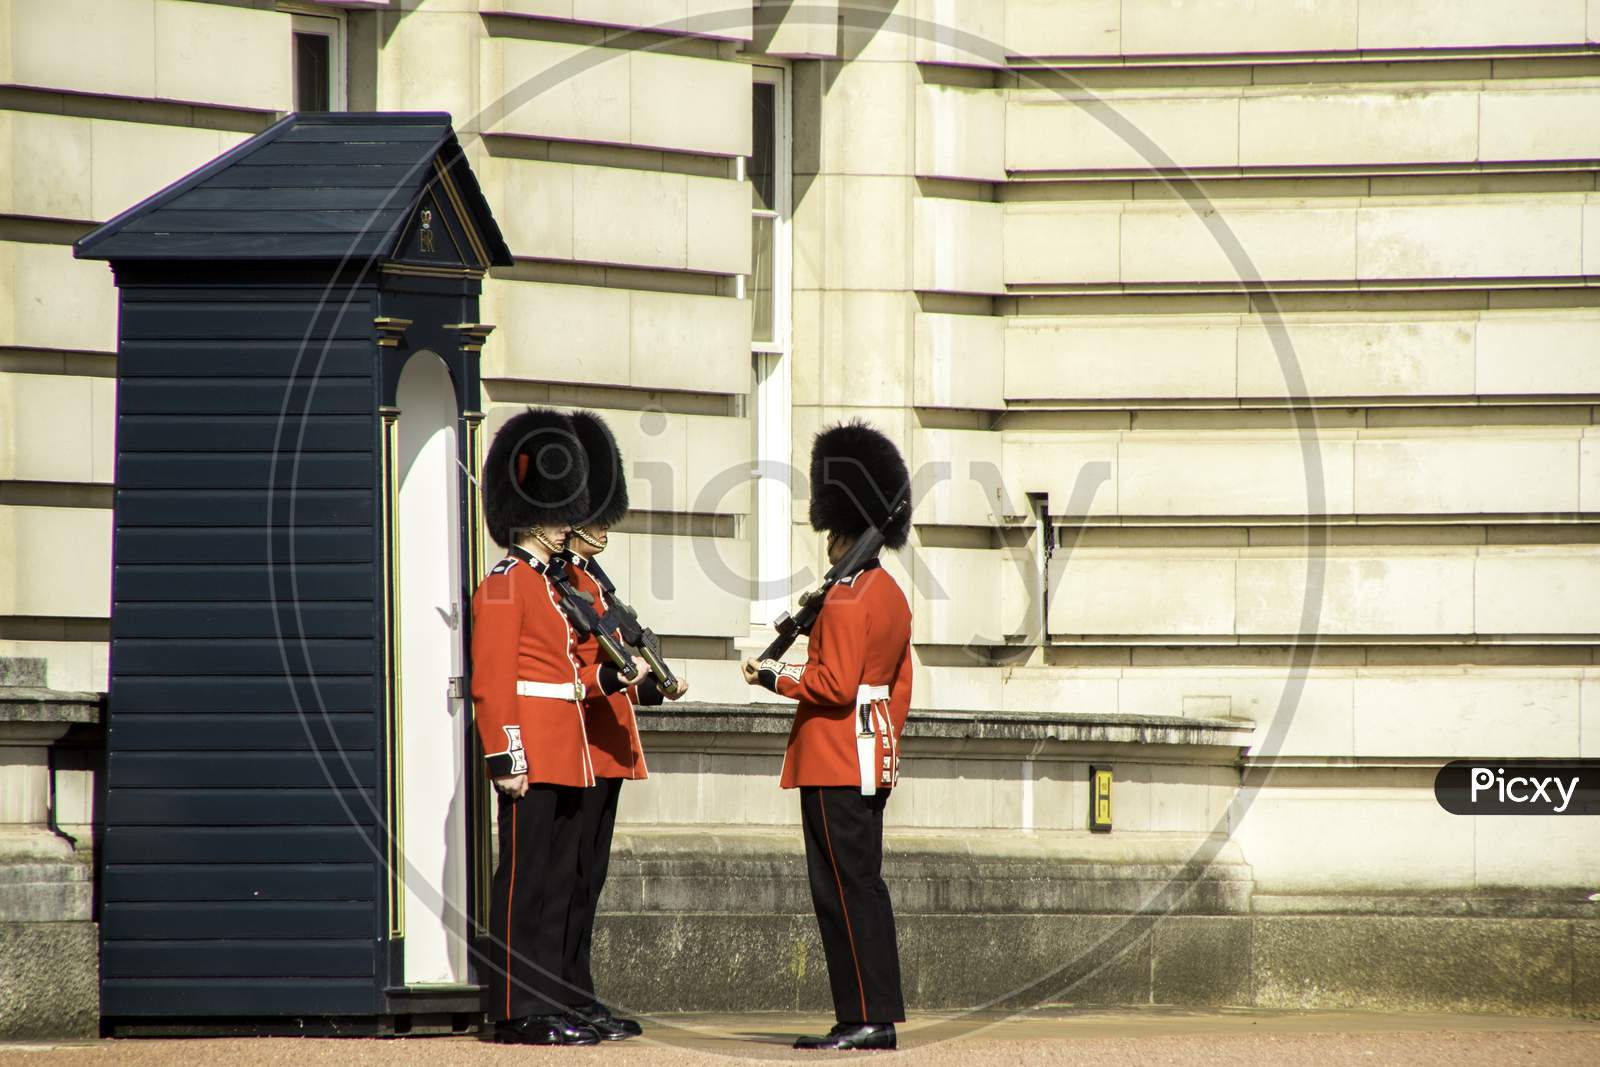 Buckingham Palace - London